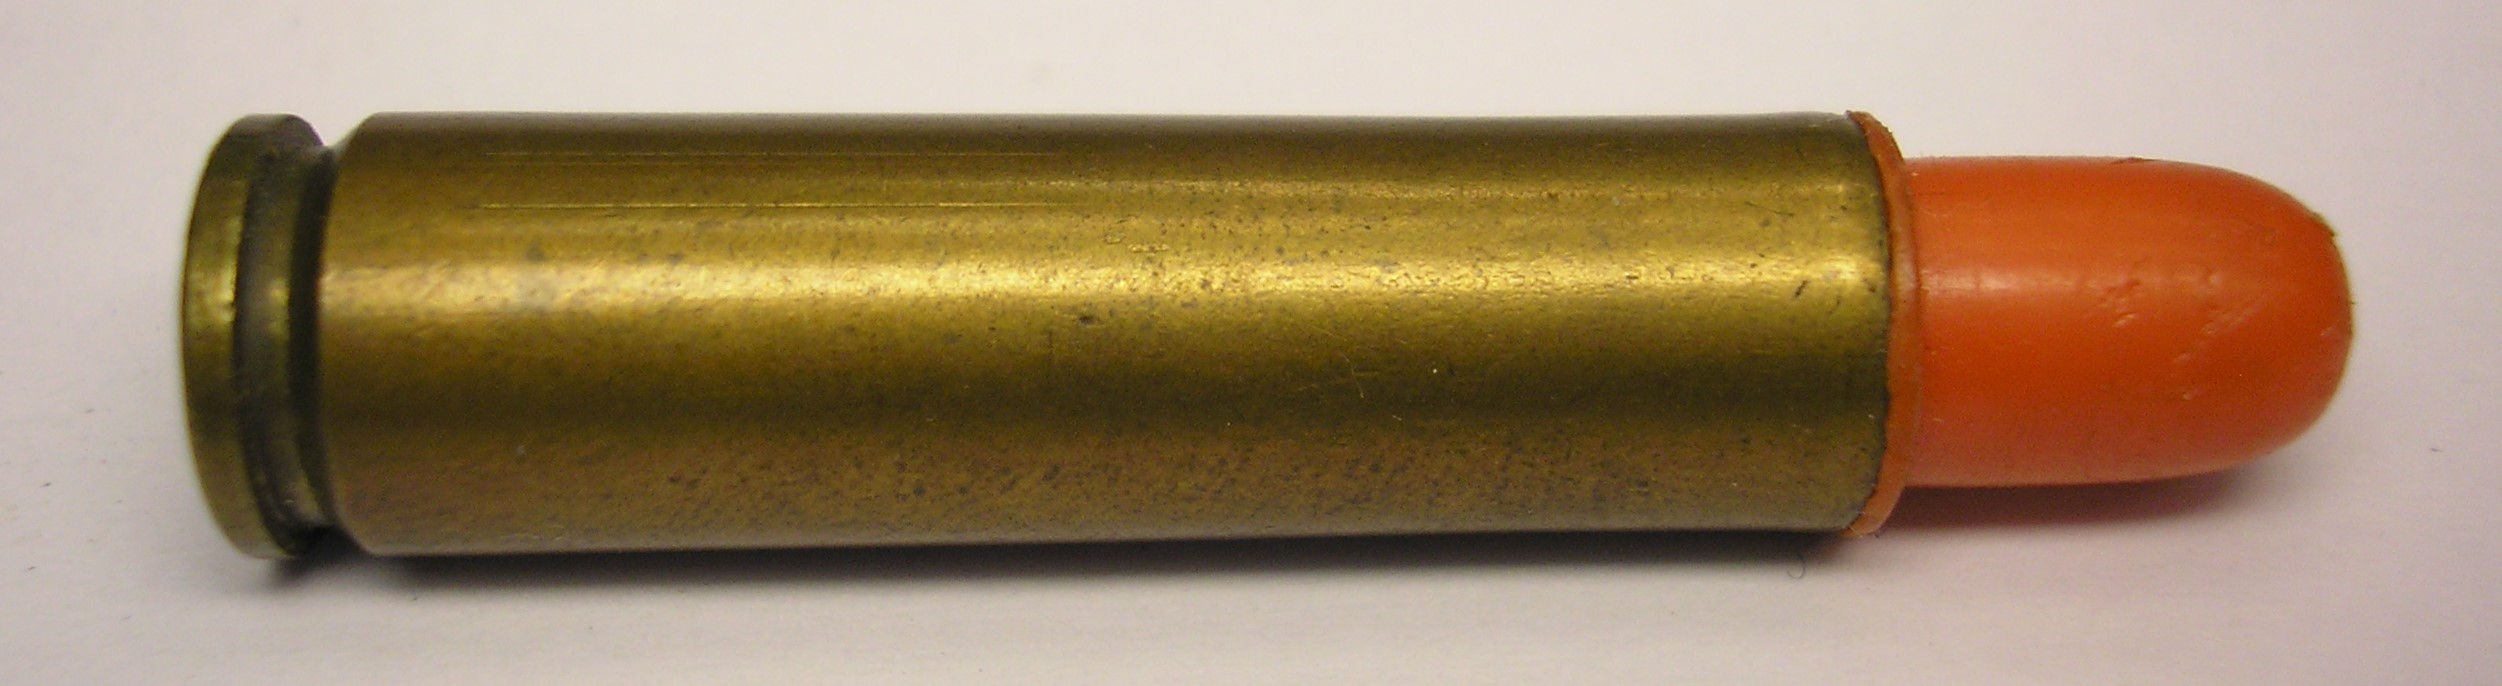 ./ammo/762x33/patroner/Patron-762x33-BF-Lospatron-Messing-Plast-Ringdal-Patent-Rod-1.JPG